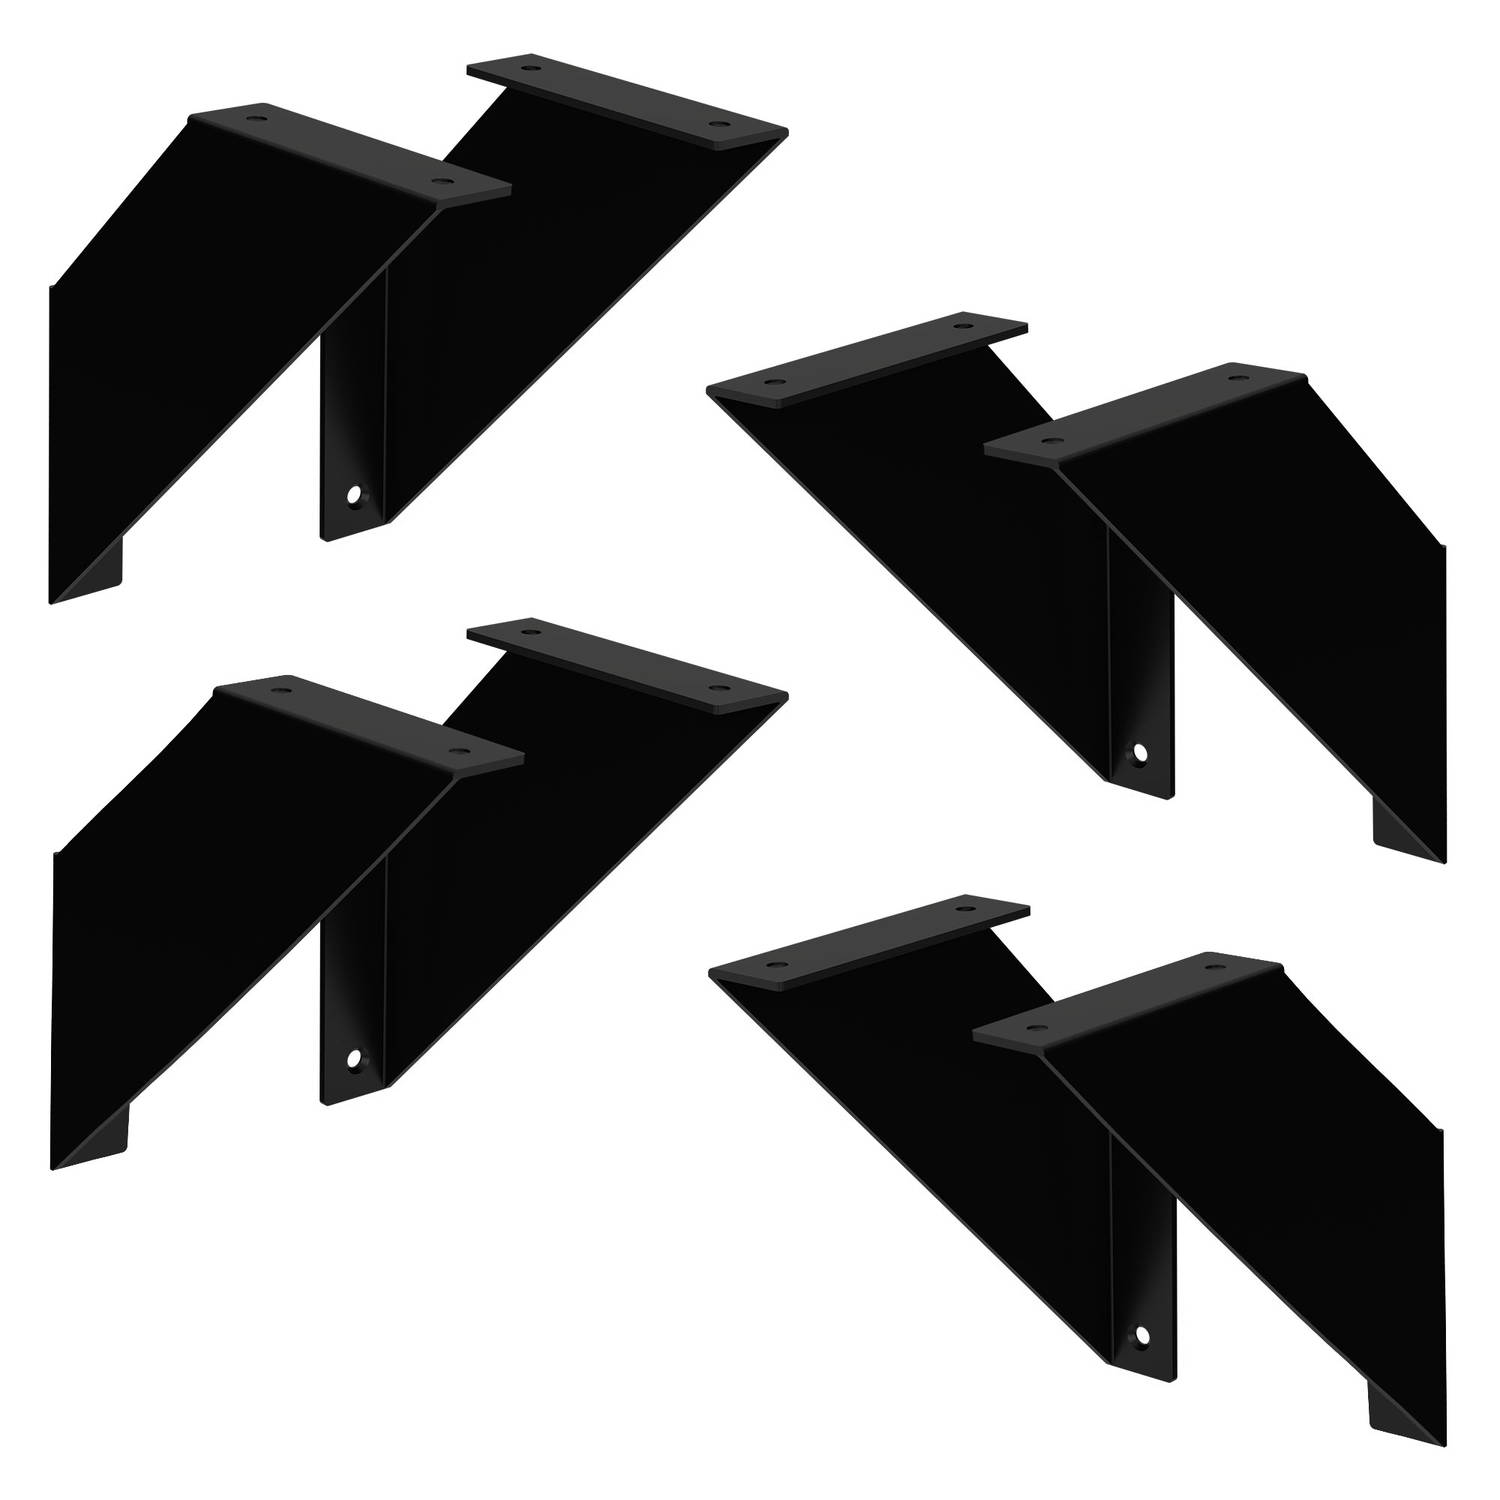 ML-Design 8 stuks plankbeugel 20 cm, zwart, metaal, driehoekige plankbeugels, zwevende plankbeugels, wandbevestiging, 90° wandbeugel, planksteun wandplank wandbeugel hangplank plan